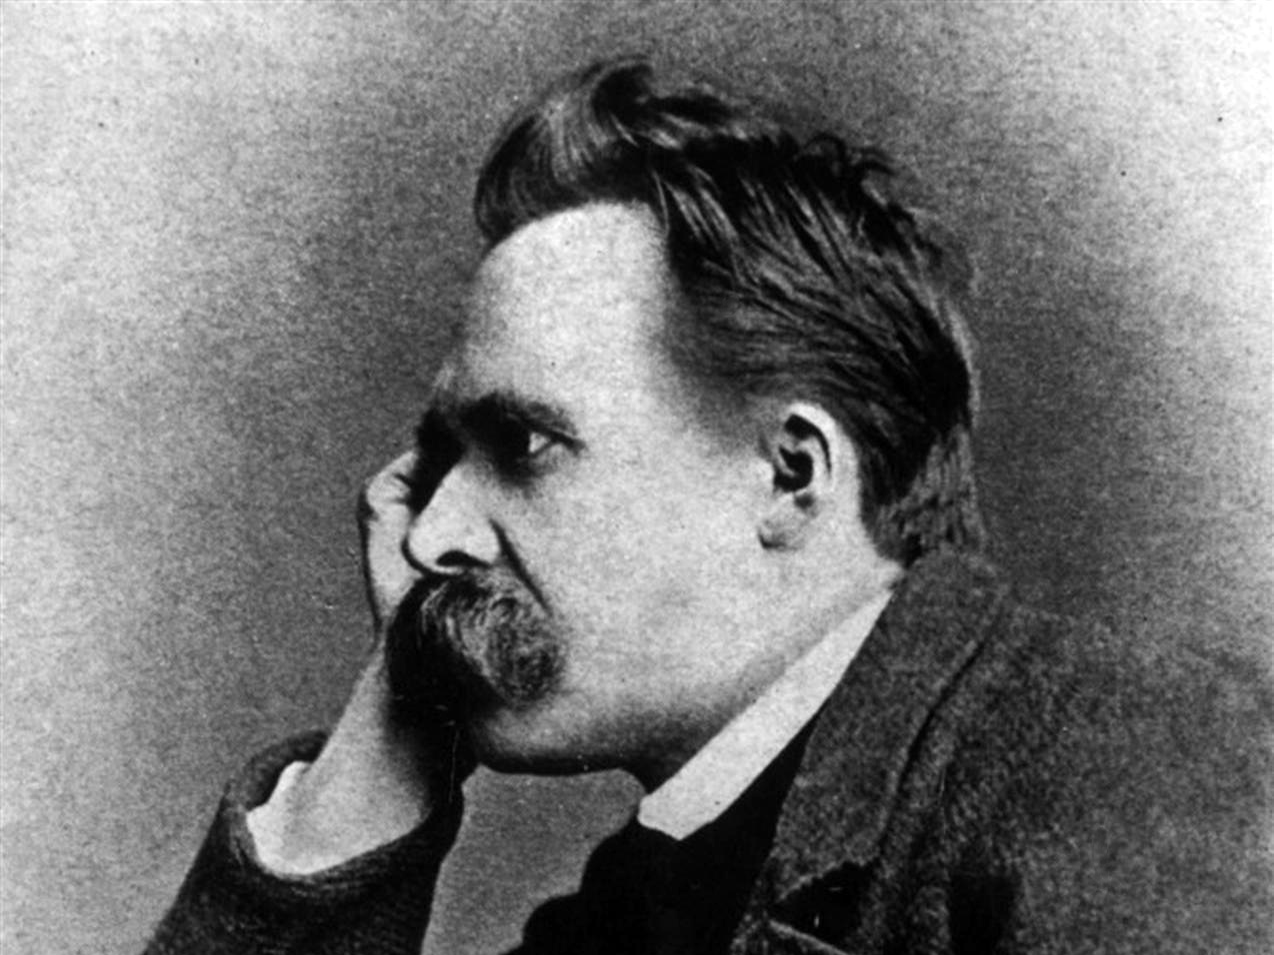 Nietzsche free will thesis